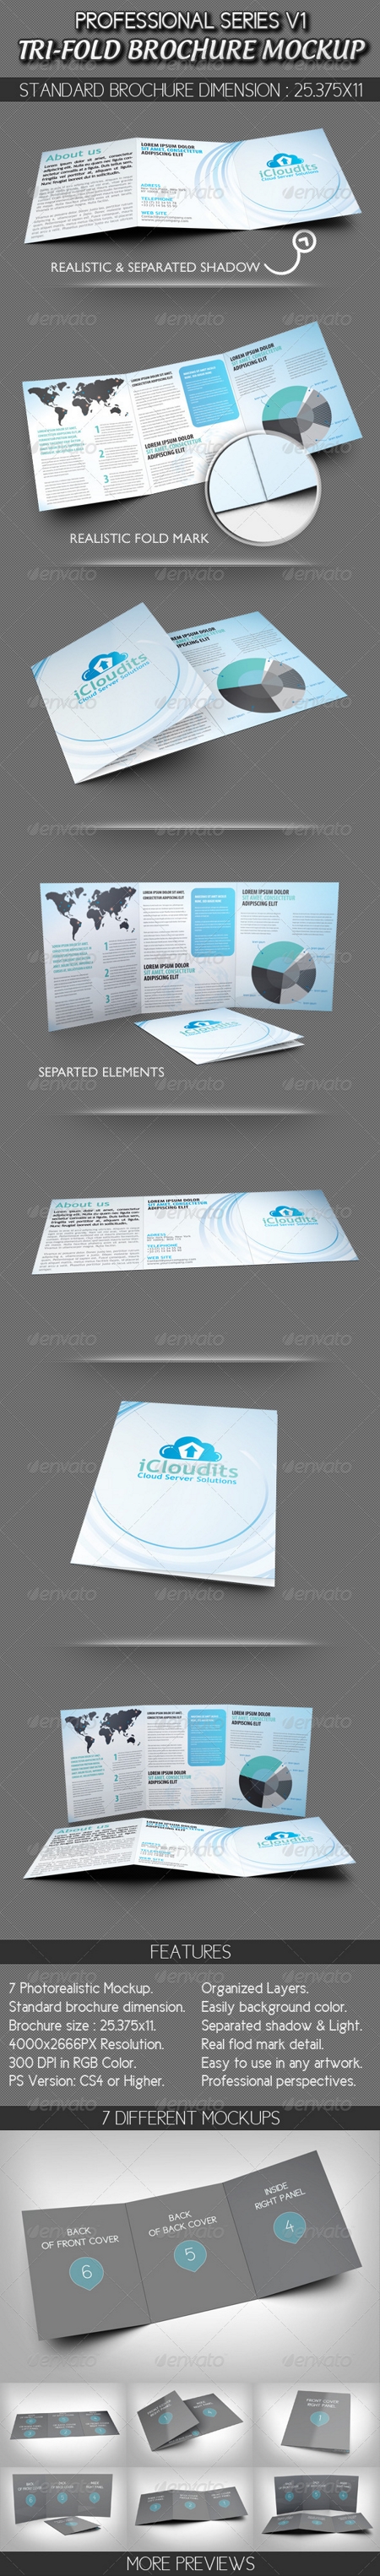 GraphicRiver: Professional Tri-fold Brochure Mockup V1